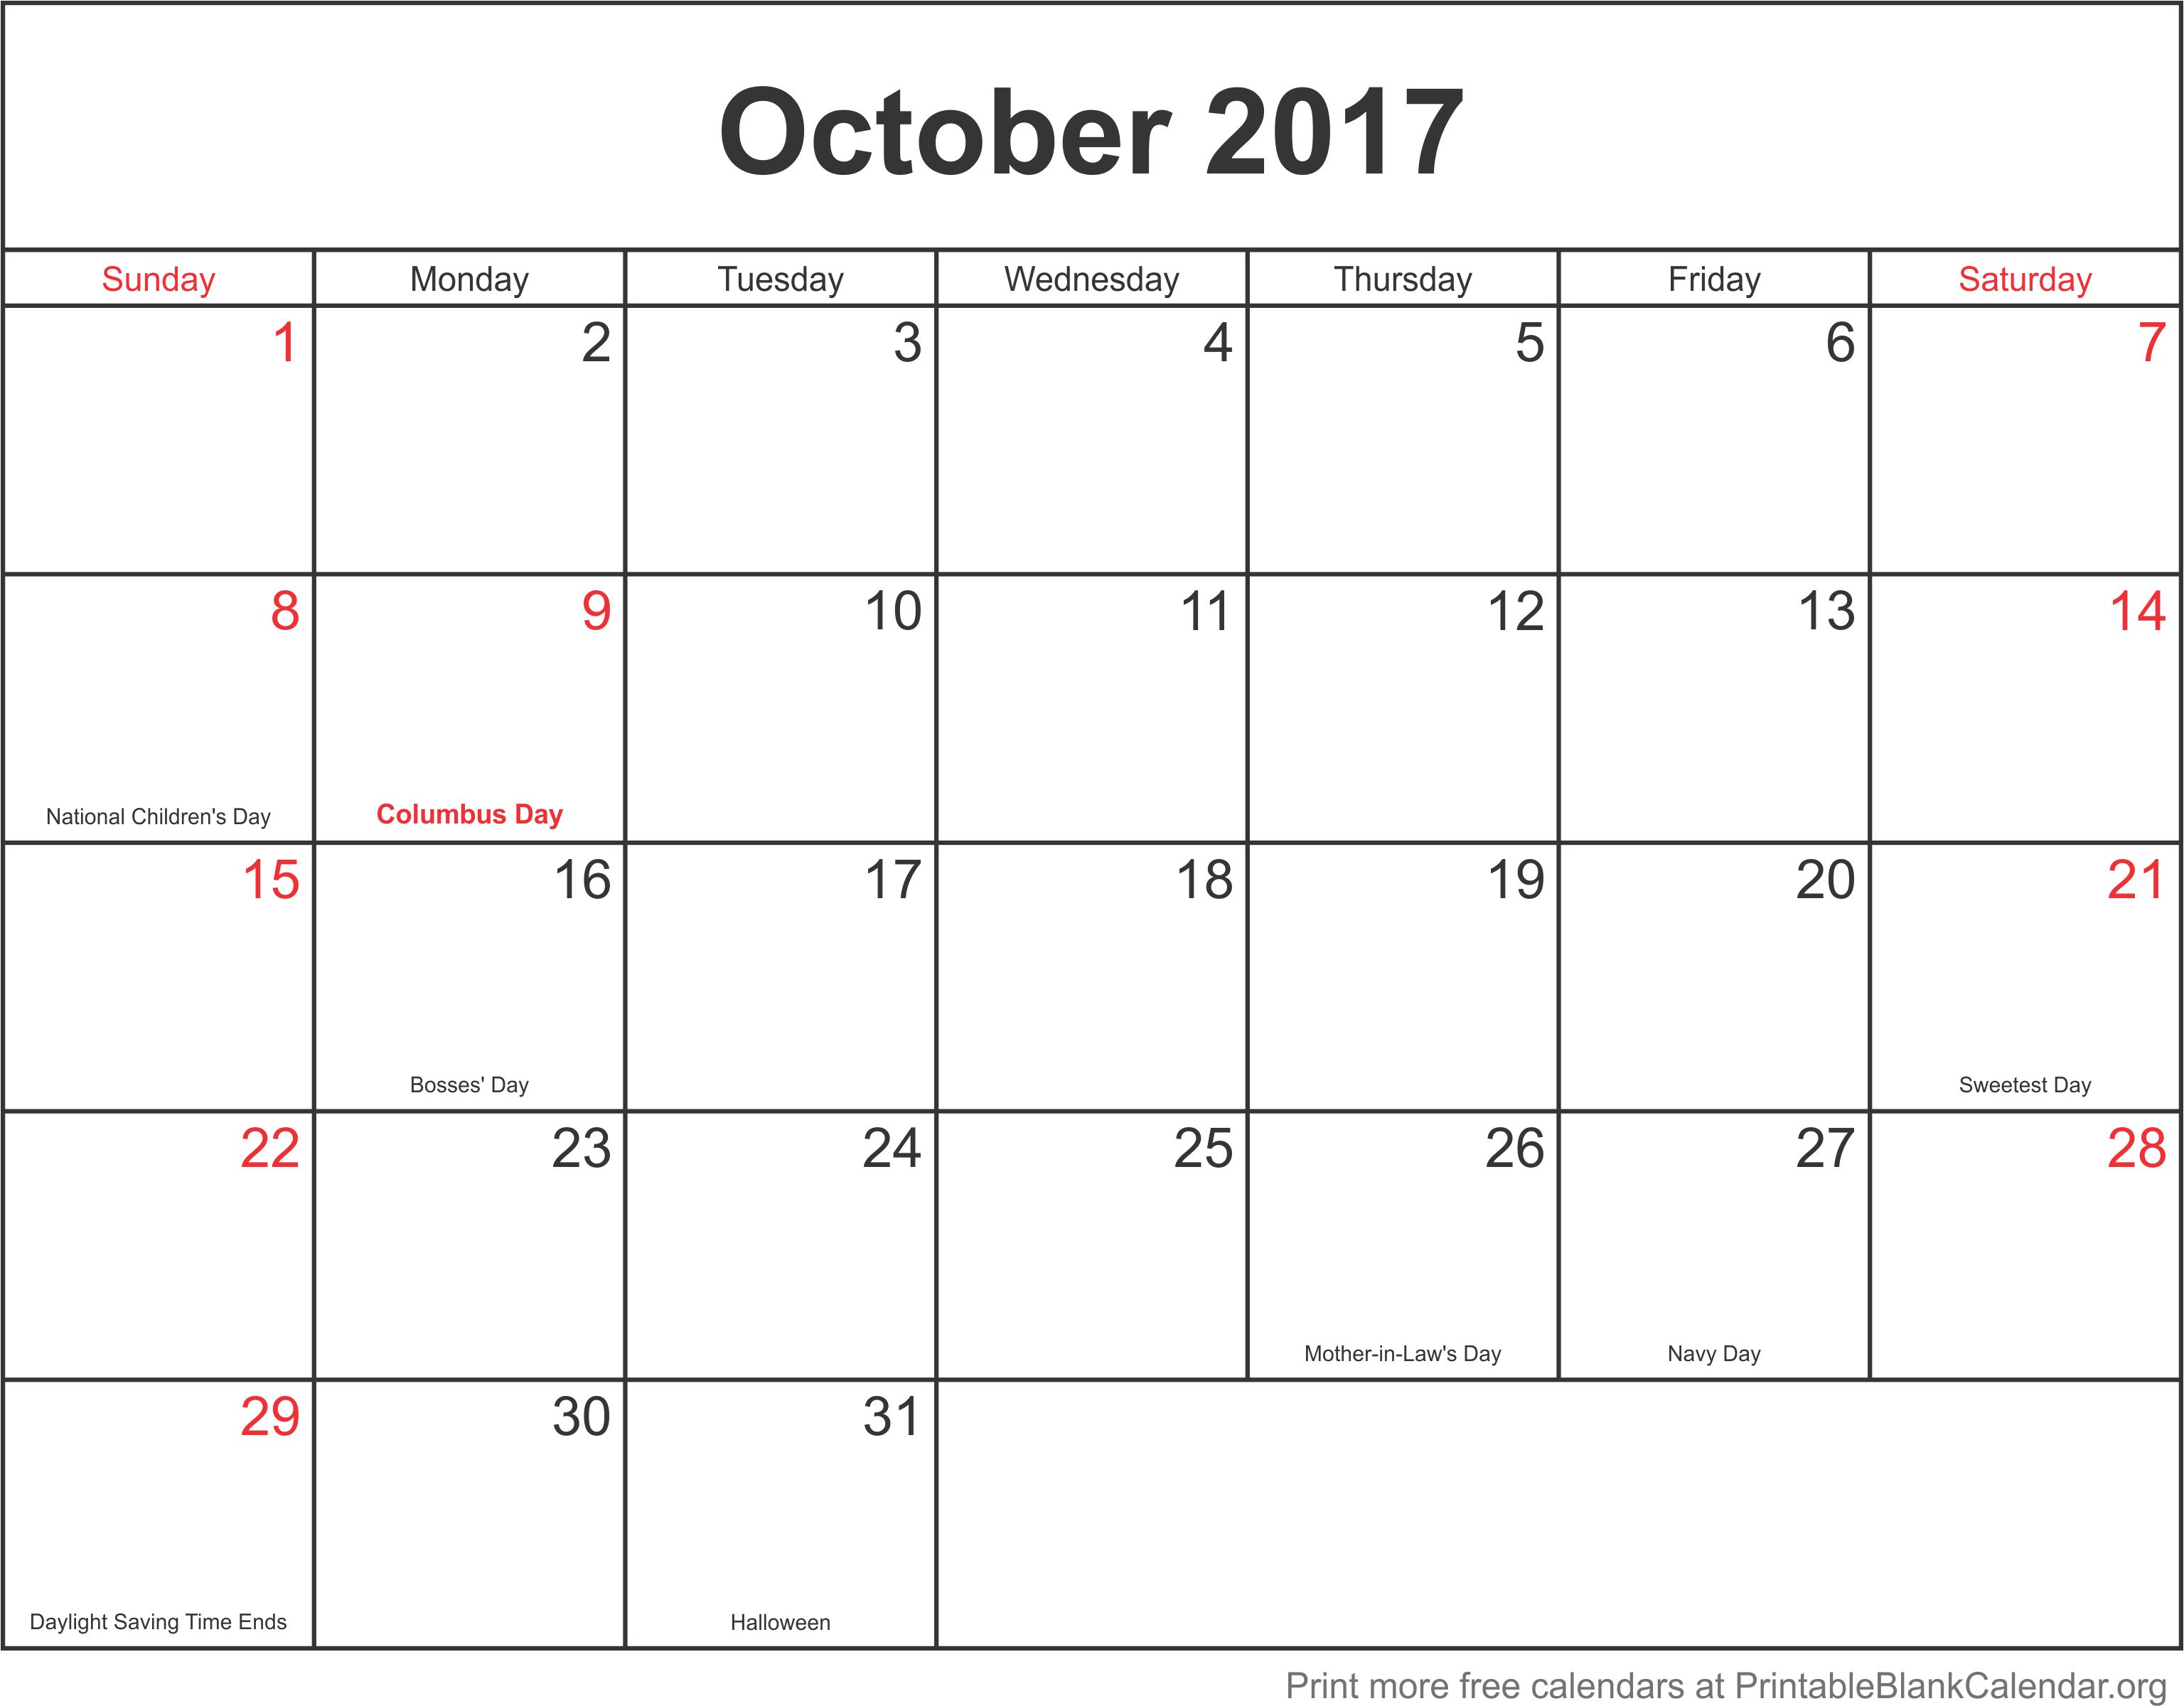 calendar-october-2017-printable-printable-word-searches